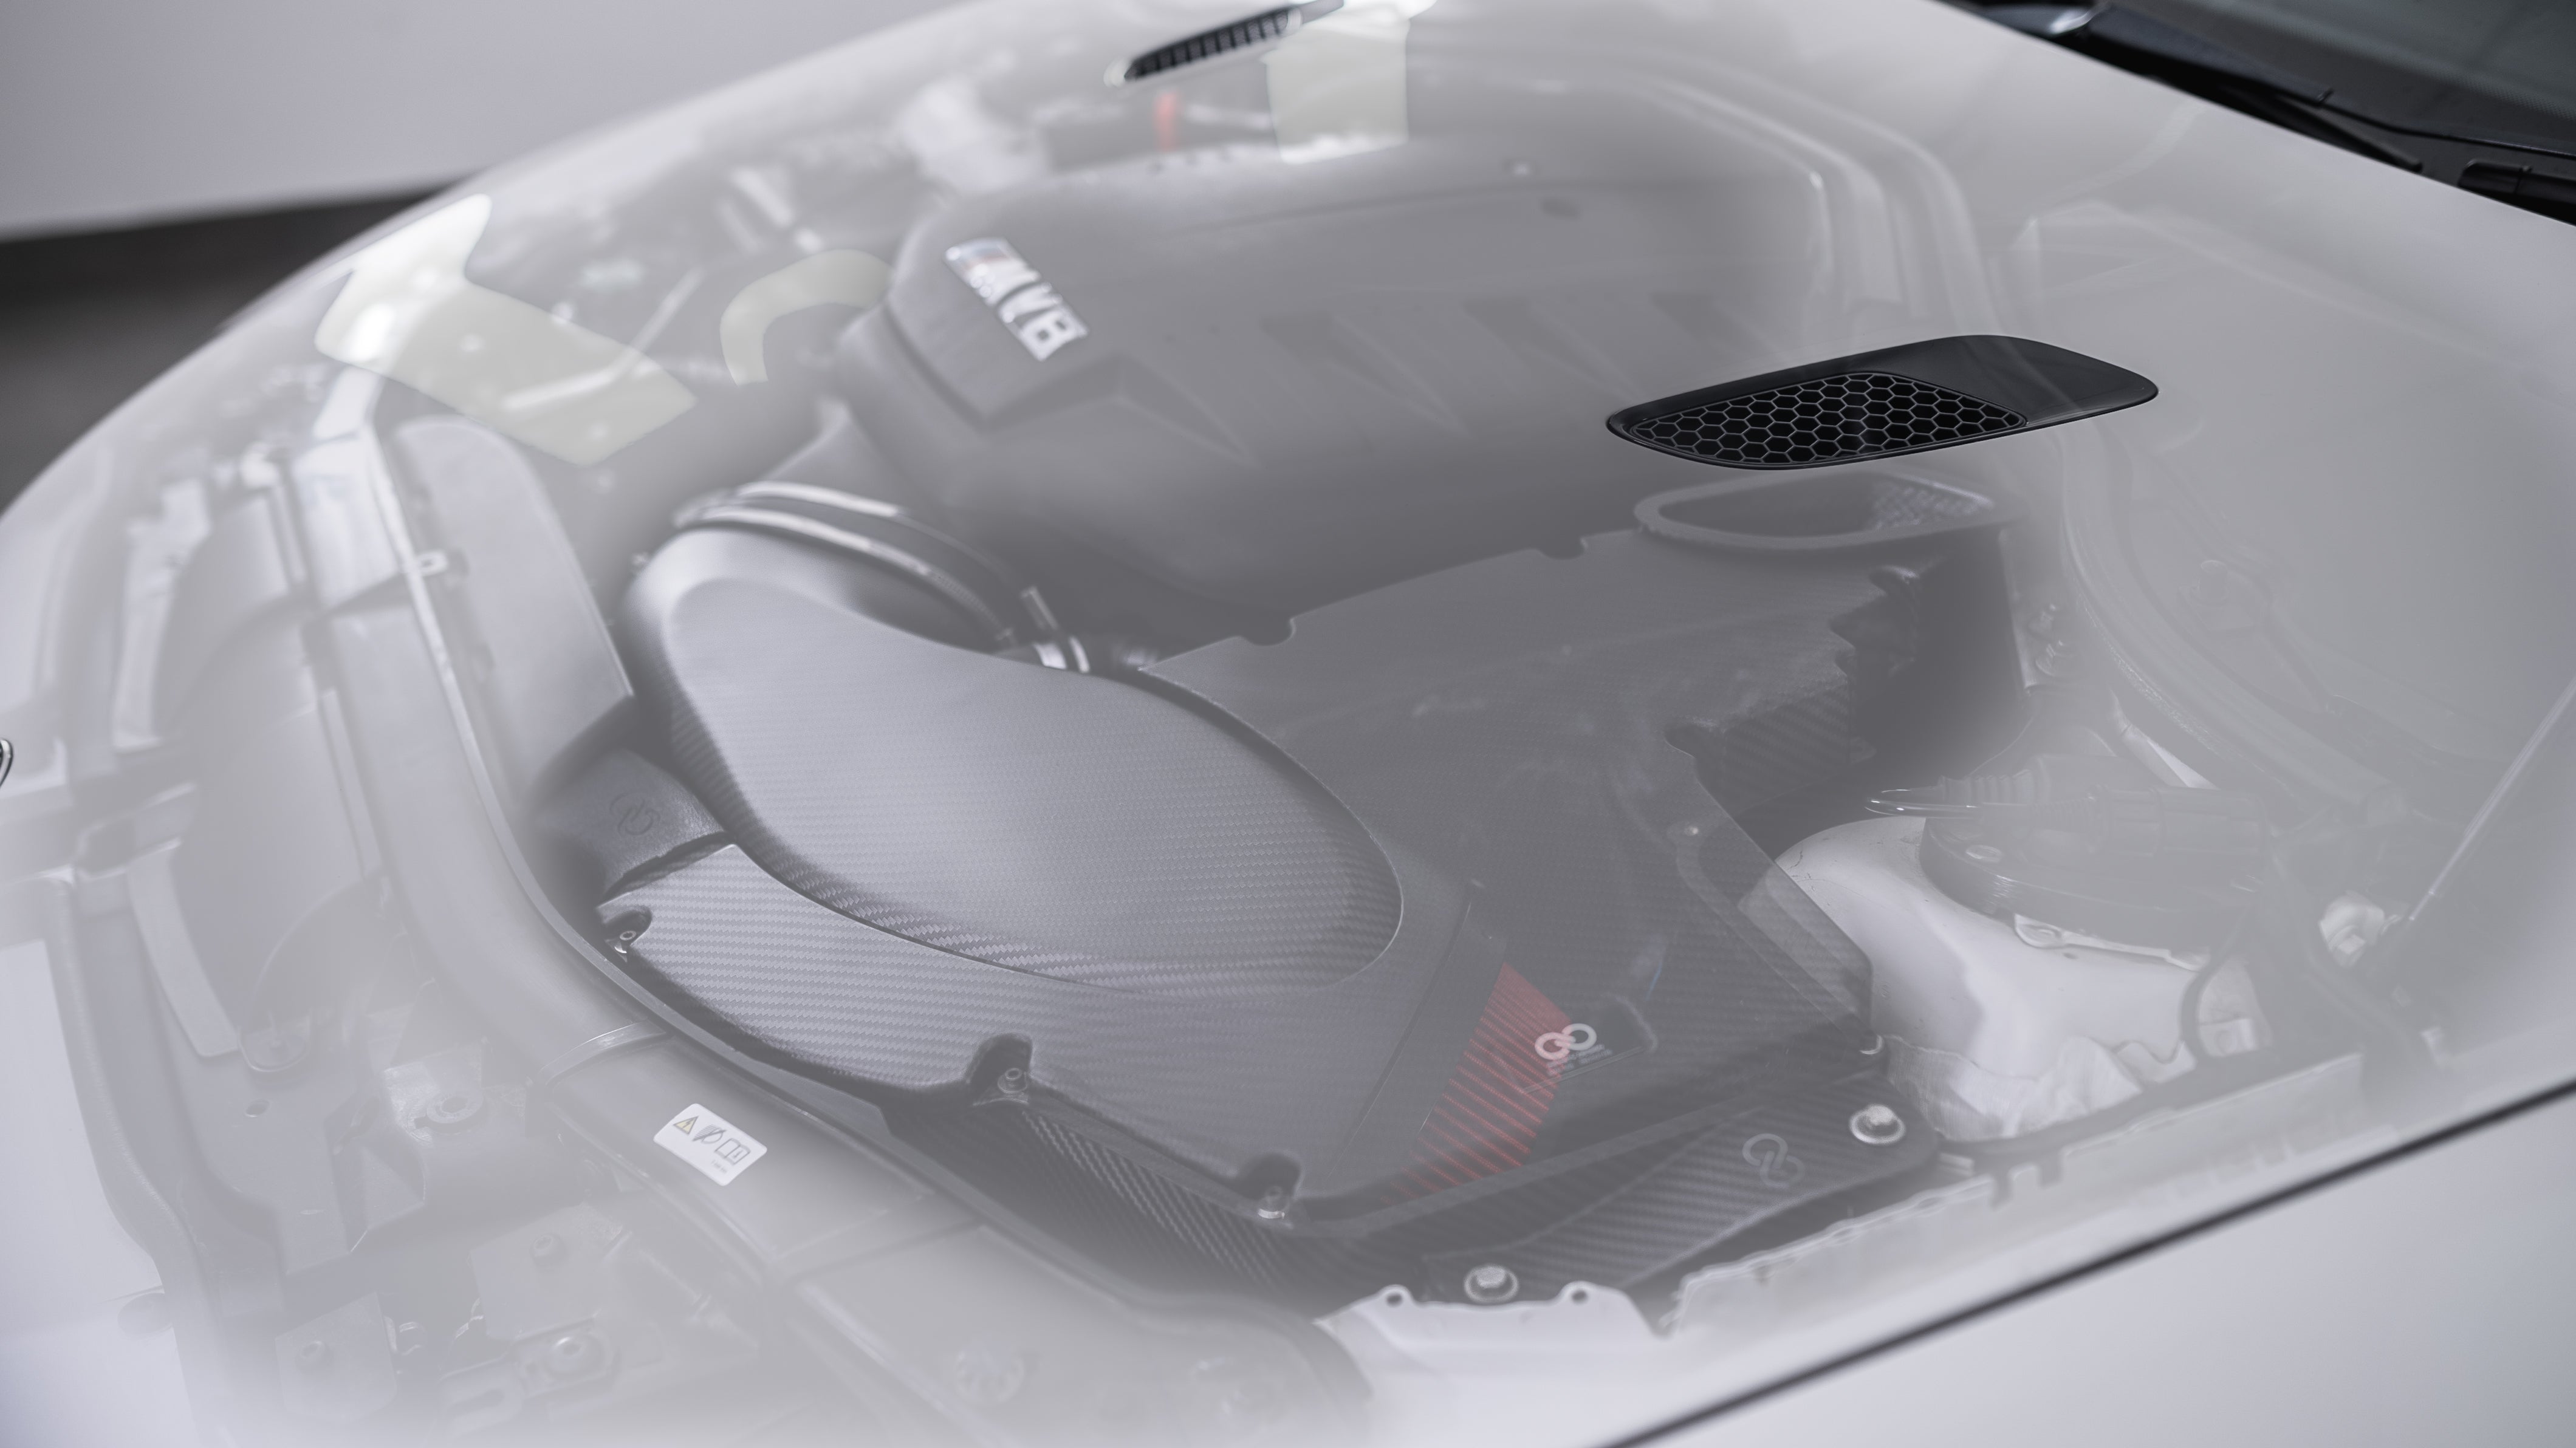 BMW E92 M3 S65 Carbon Fiber Air Intake